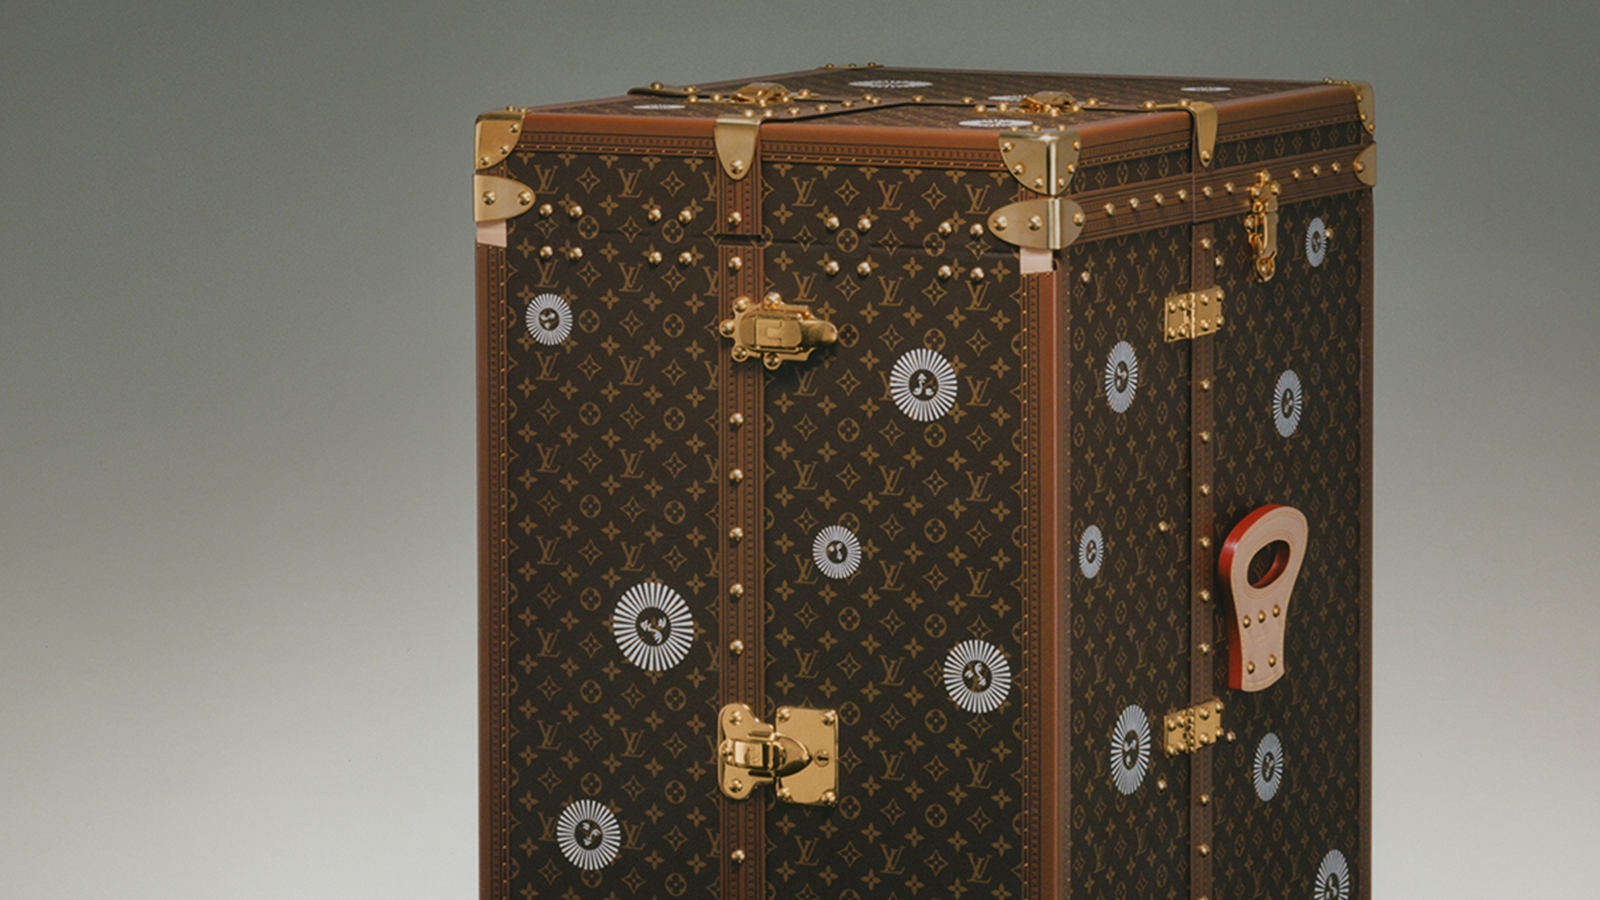 Courrier trunk Louis Vuitton - Des Voyages - Recent Added Items